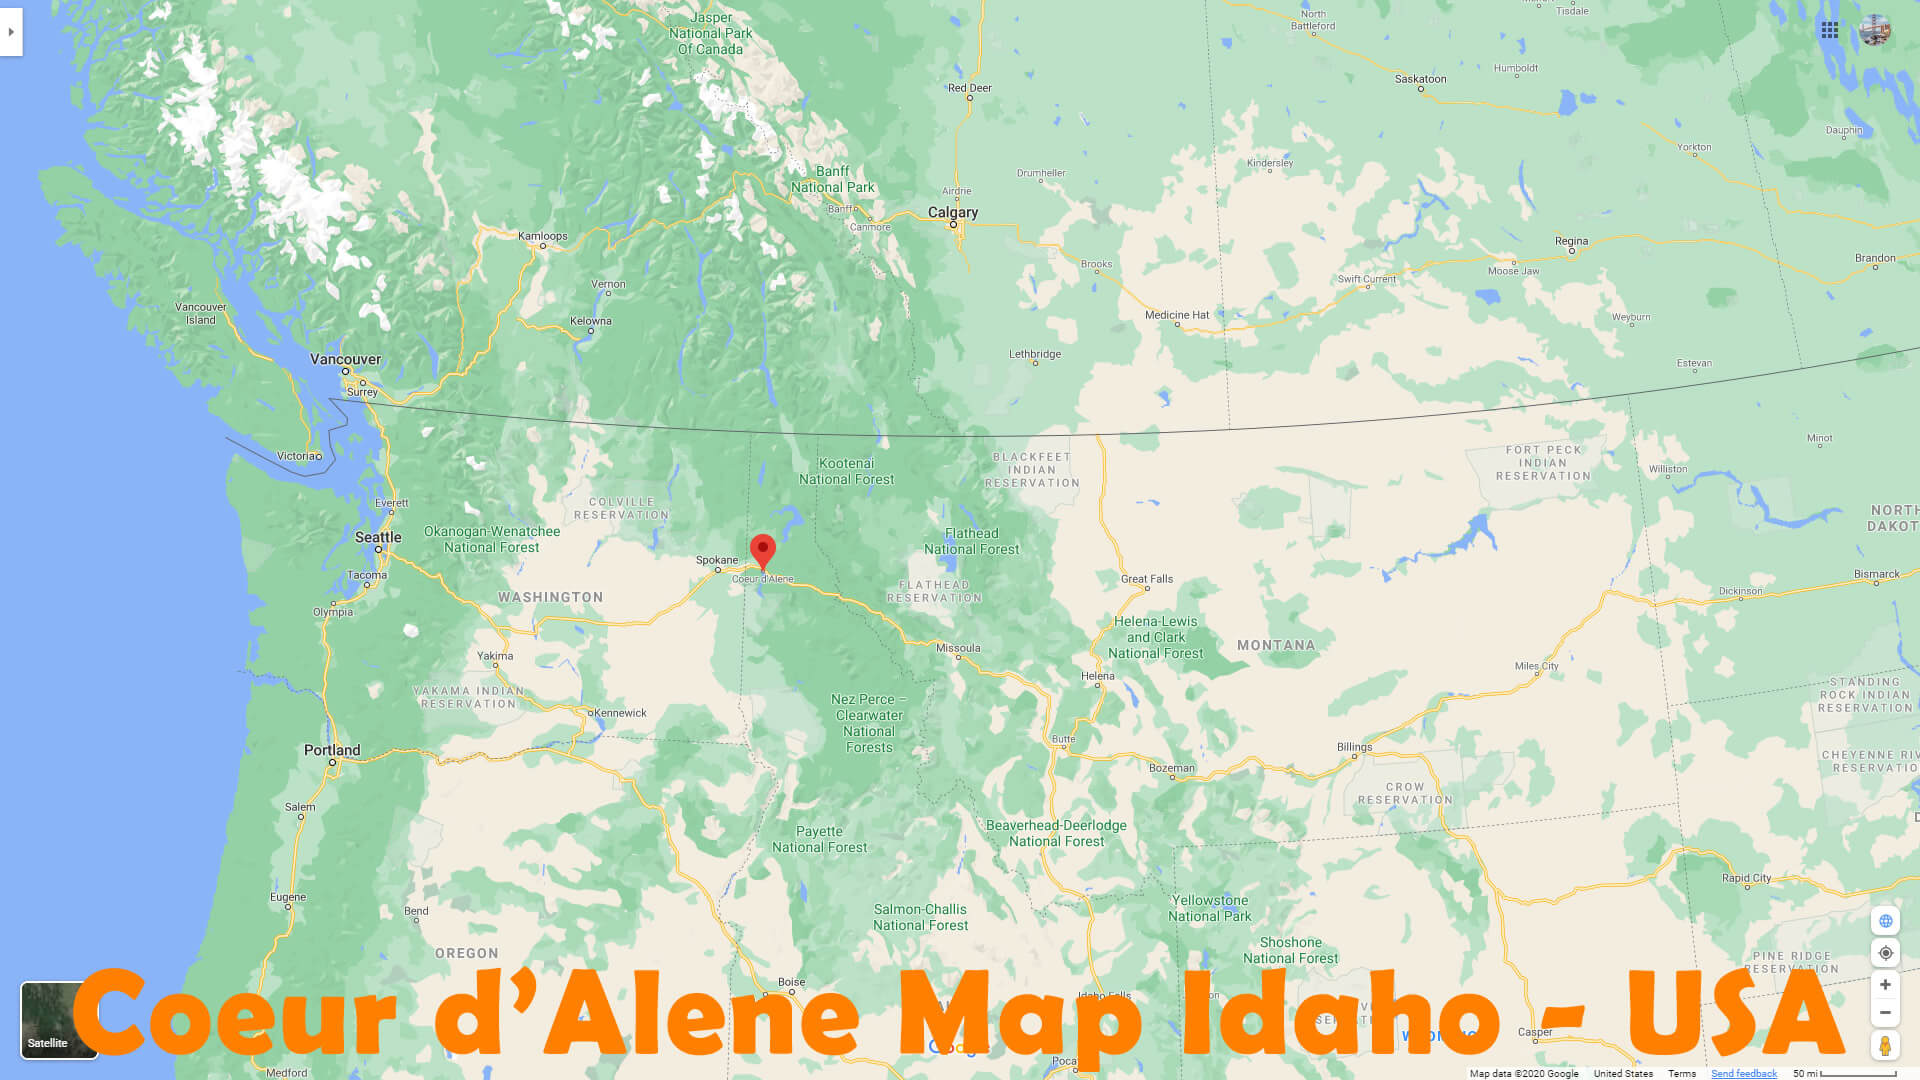 Coeur d'Alene Map Idaho   USA